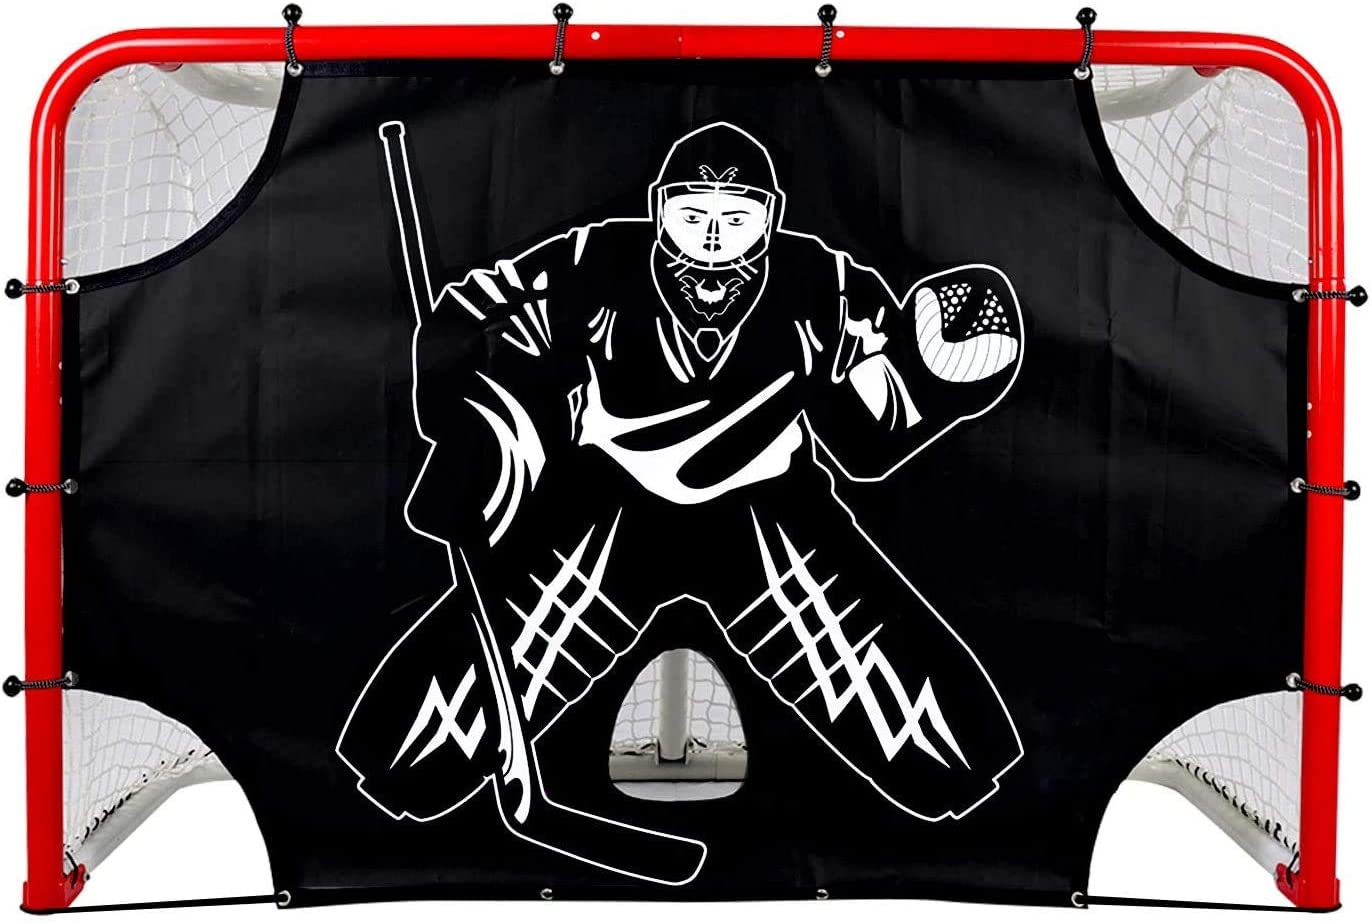 Ice Hockey Shooting Targets, Training Shot Accuracy, Fit 72" x 48" Goal Hockey Targets